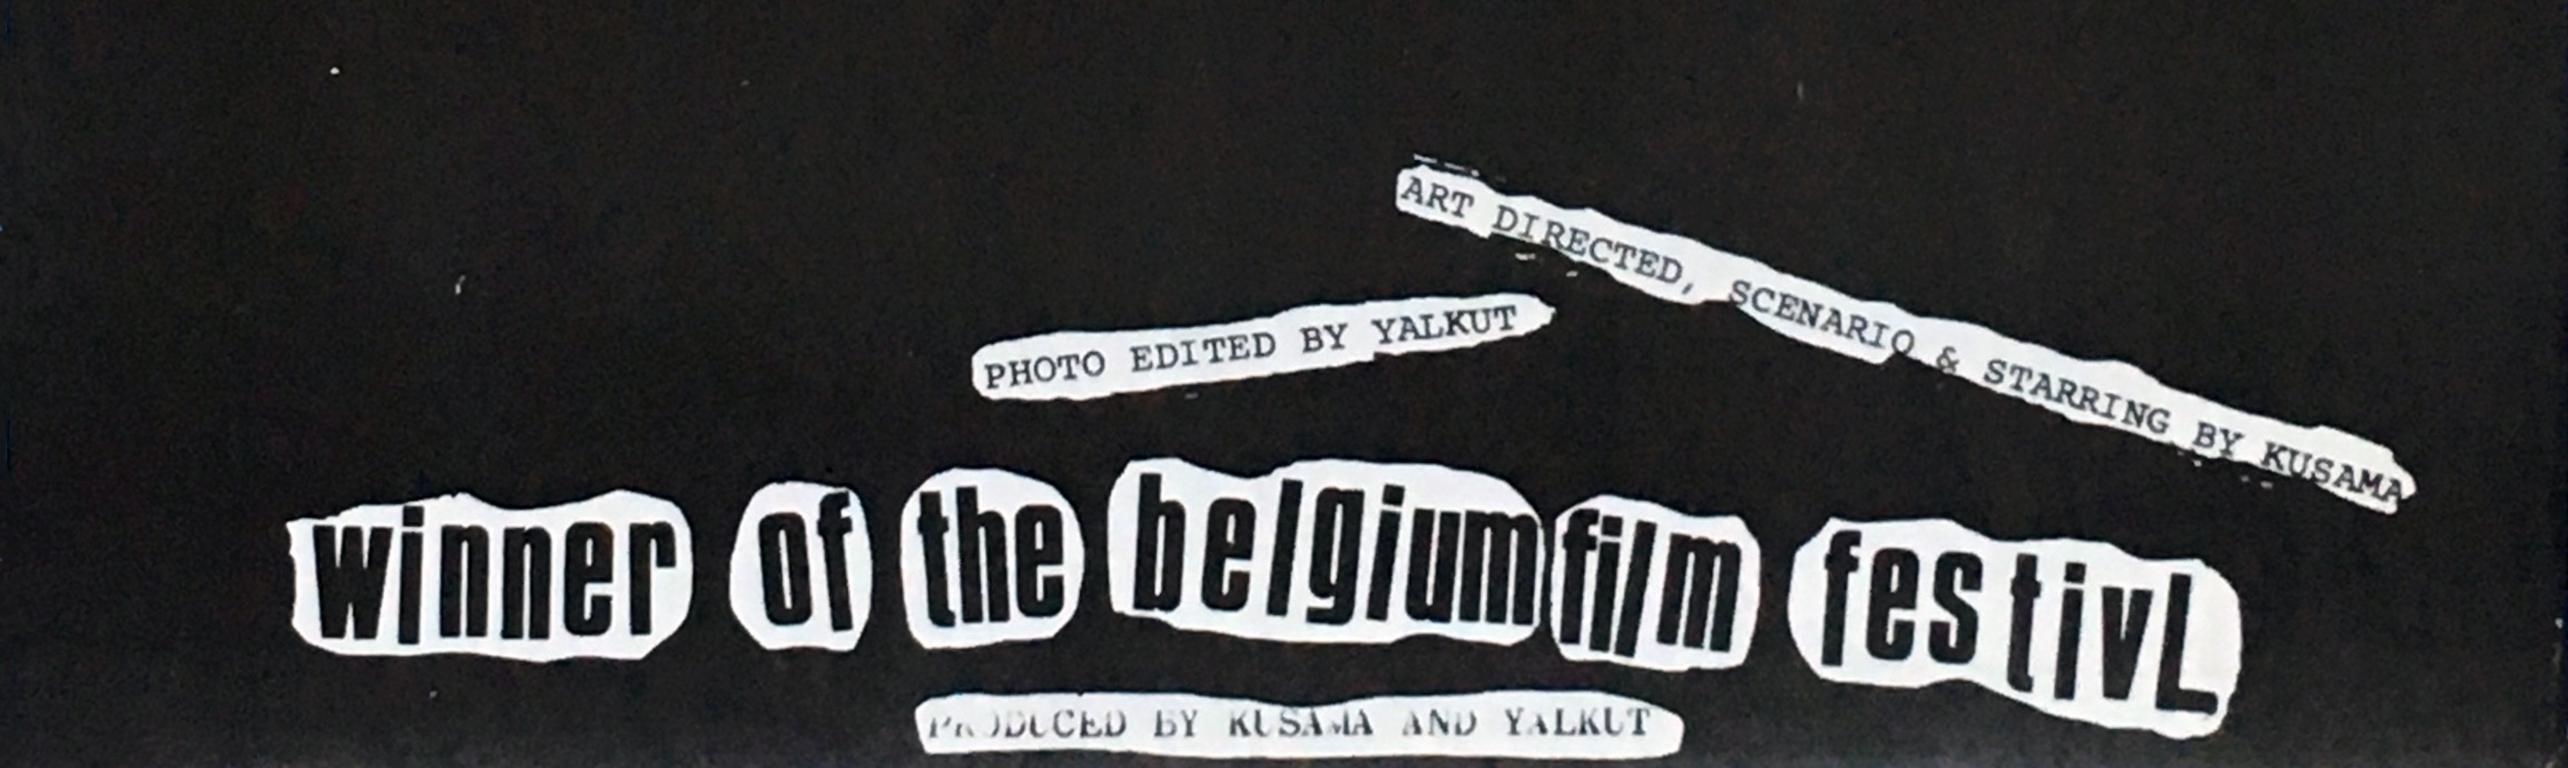 Yayoi Kusama Self-Obliteration  New York, NY 1968
Rare original flyer / announcement designed by Yayoi Kusama to promote a screening of Kusama's historic 1968 film 